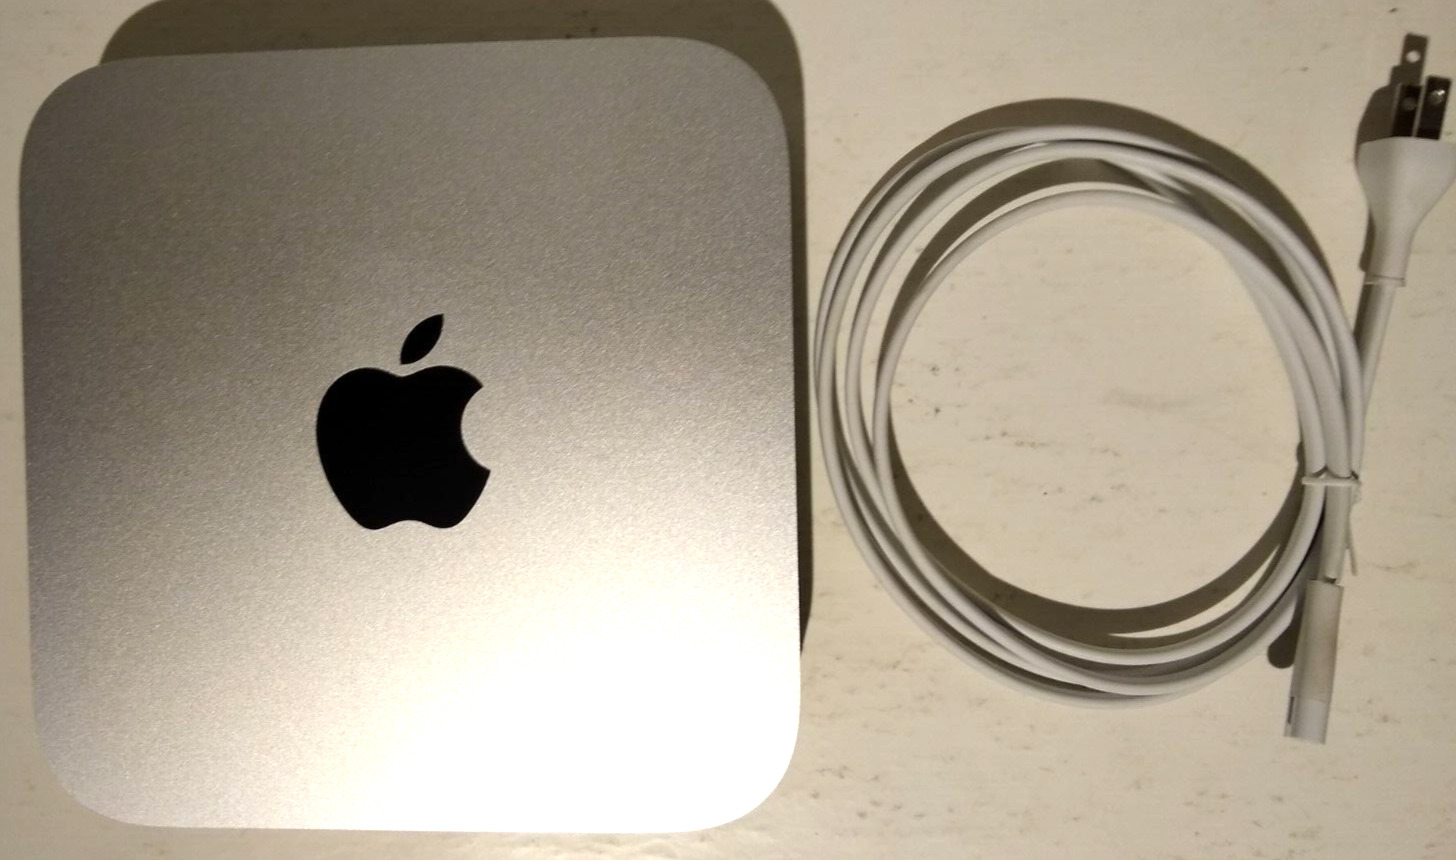 Apple Mac Mini A1347 i5-3210M 2.5GHz 4GB 500GB HDD Computer W/ Power Cord